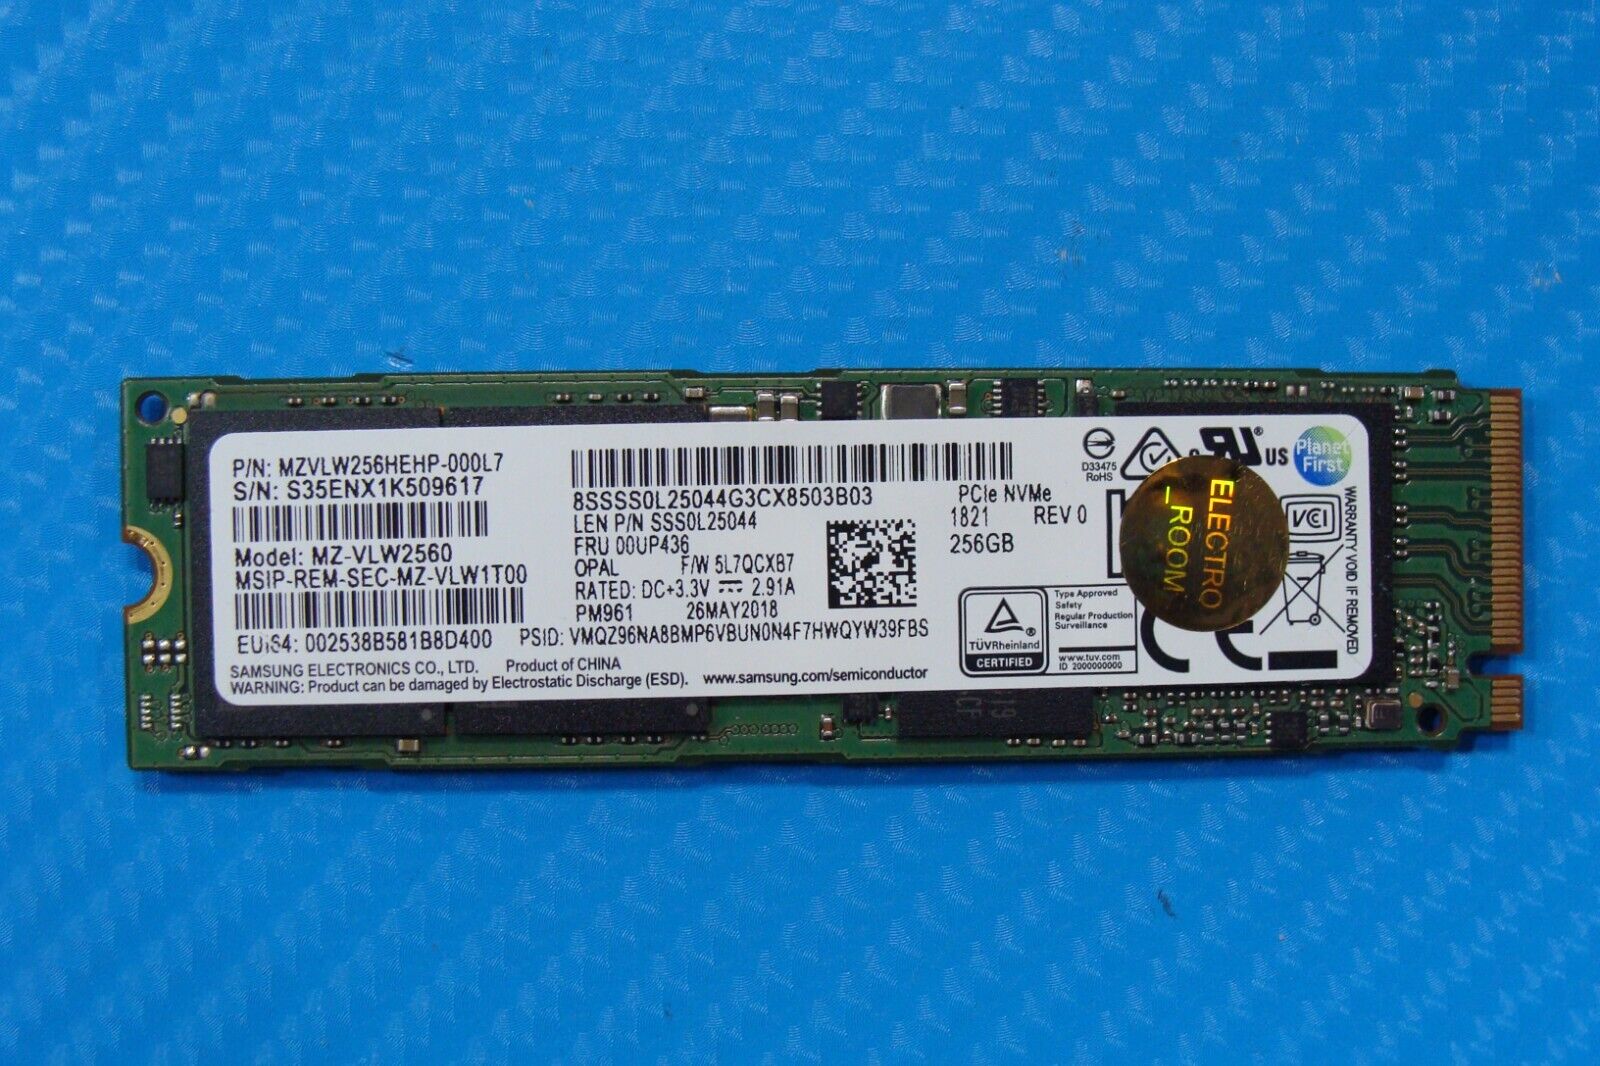 Lenovo T480s Samsung 256GB NVMe M.2 SSD Solid State Drive MZVLW256HEHP-000L7